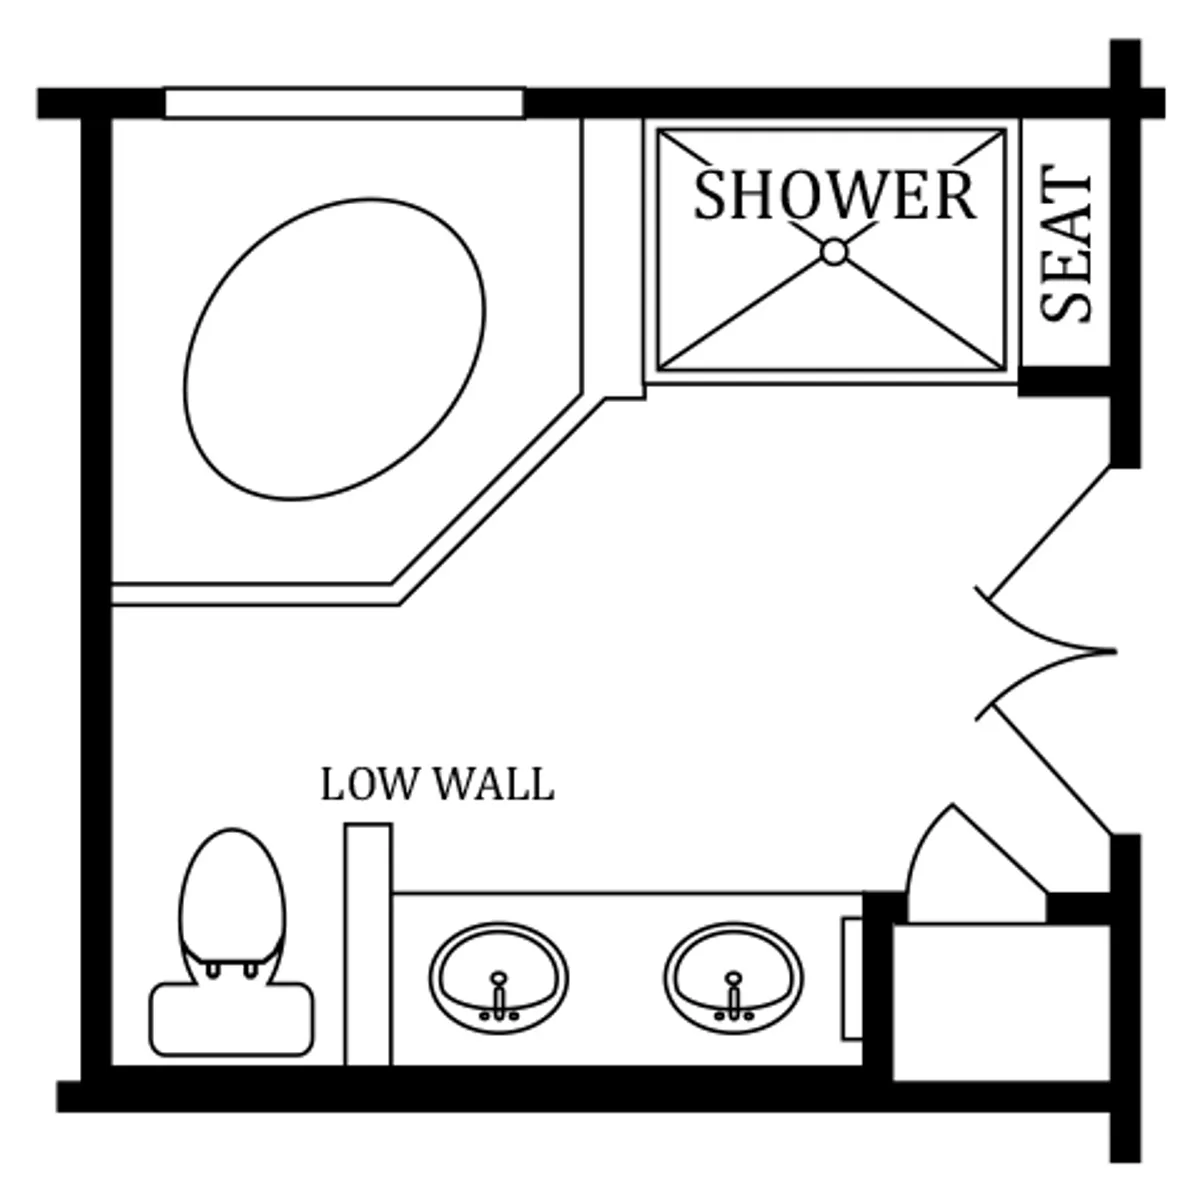 Alternate Second Floor Plan | Optional Super Bath